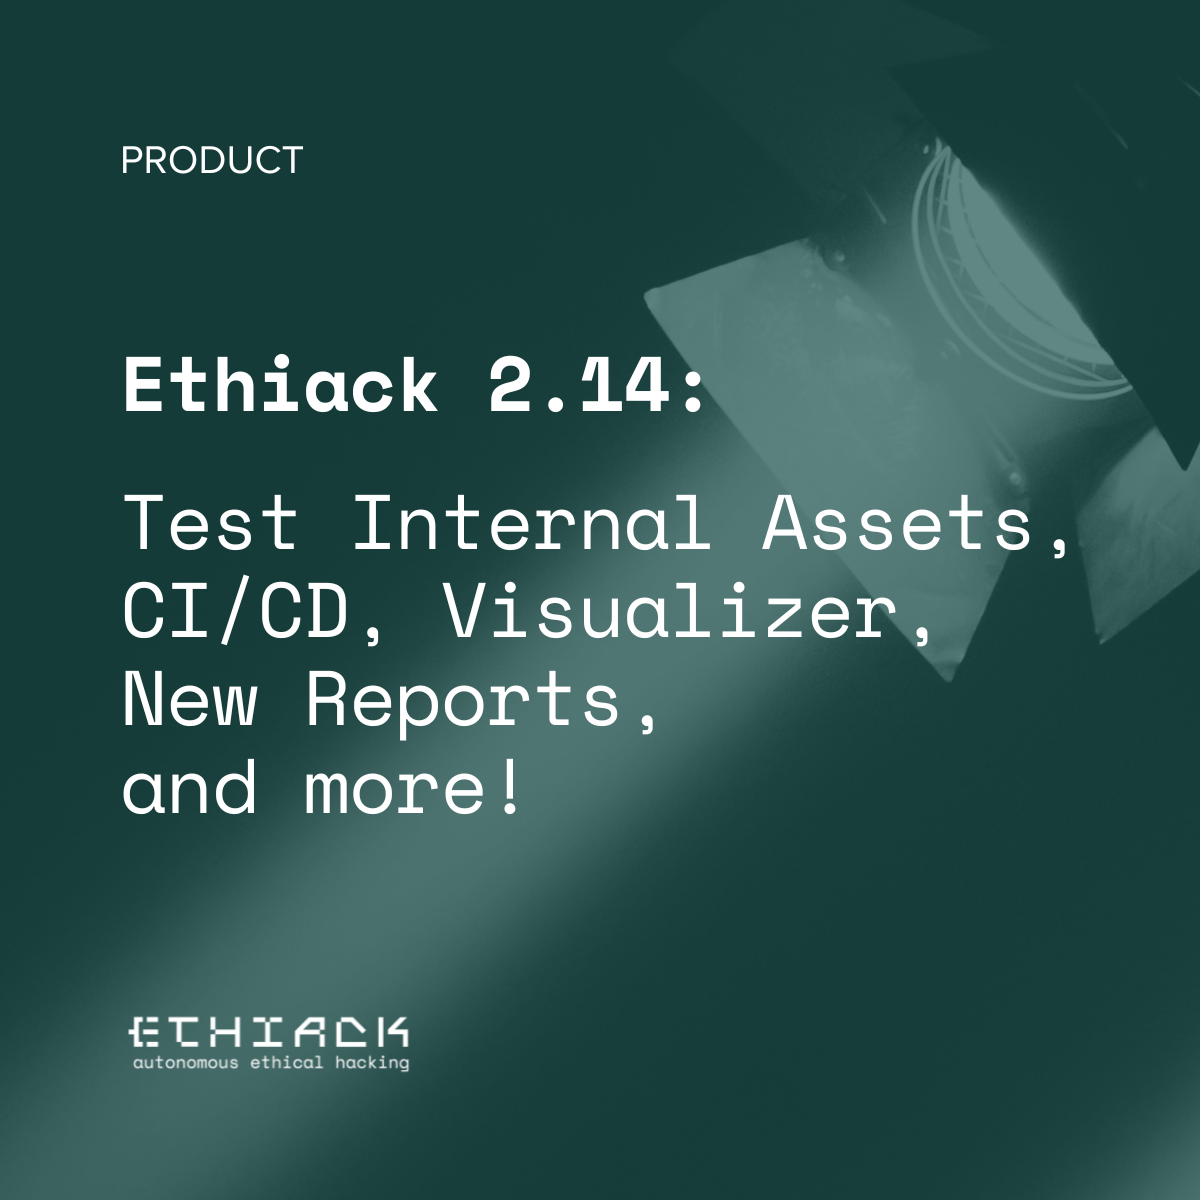 Ethiack-2.14-Overview